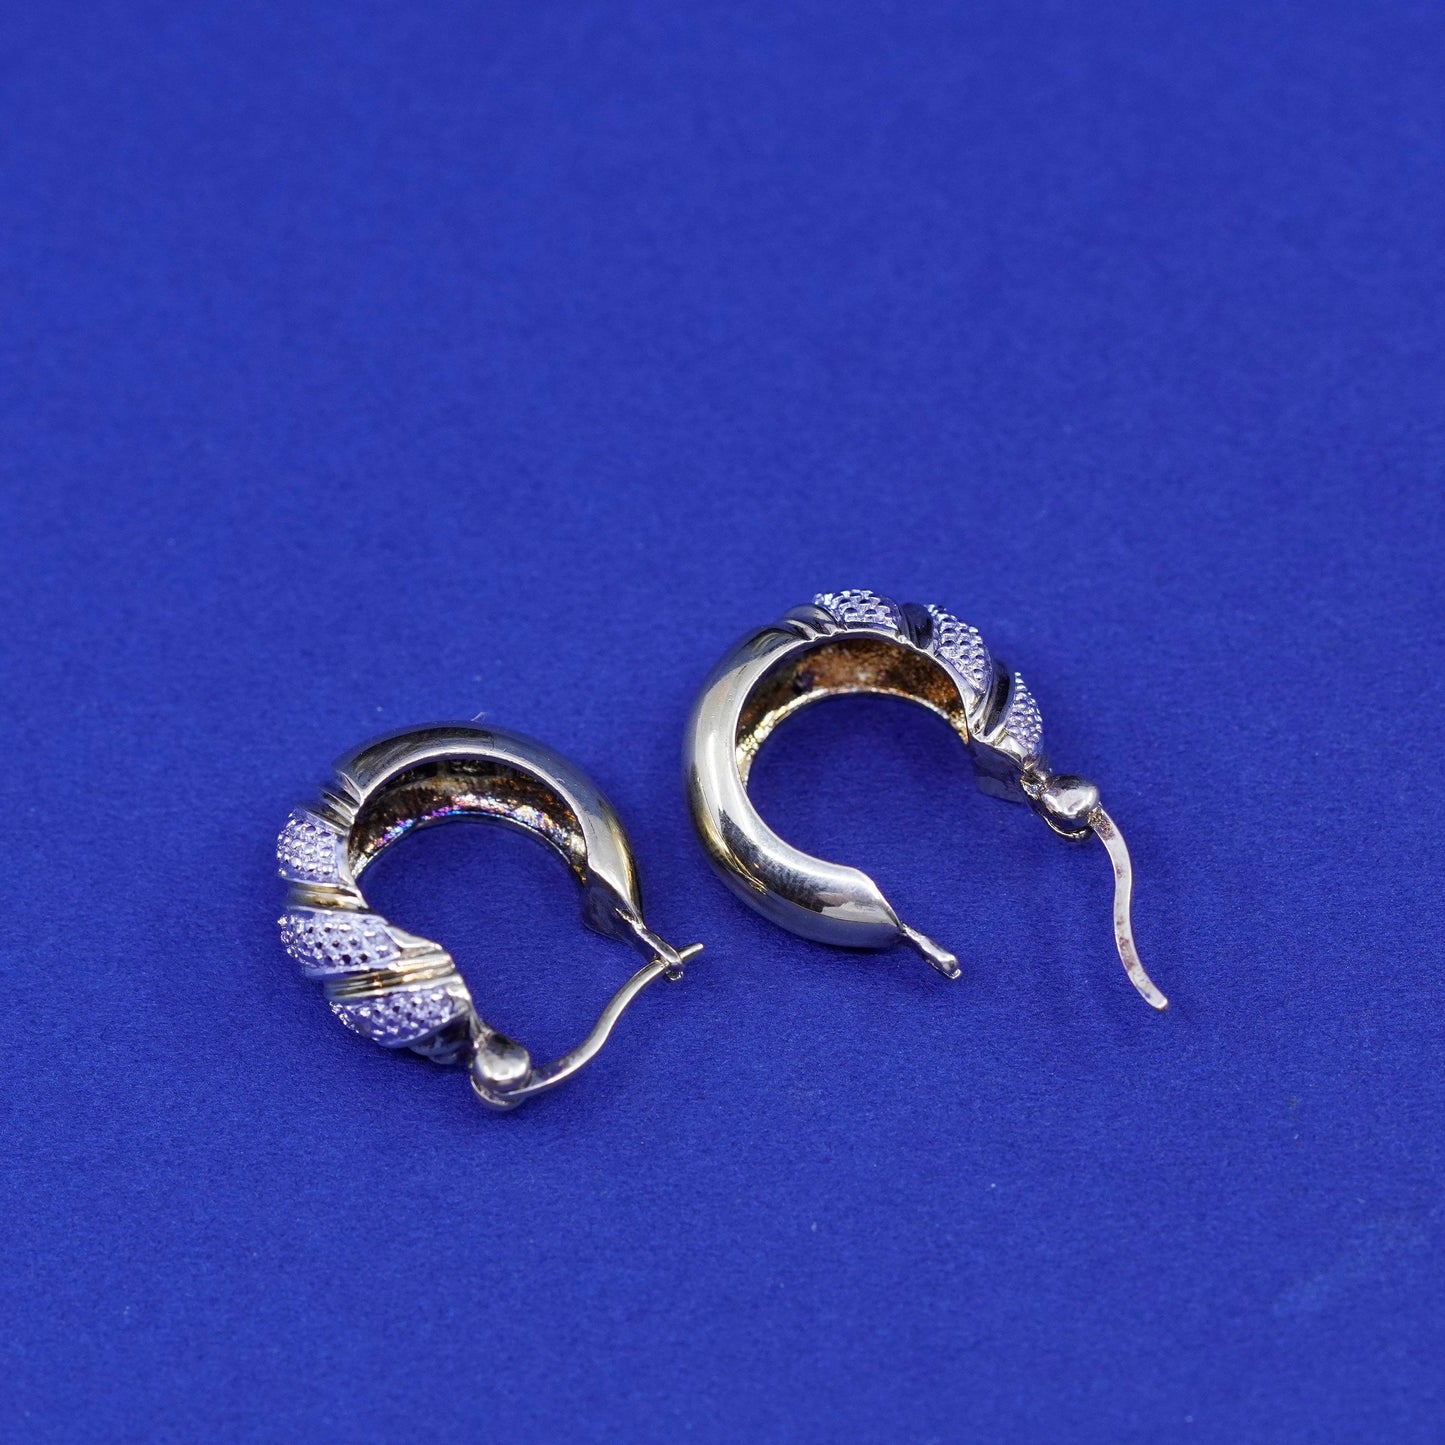 0.75”, Vermeil gold over Sterling silver earrings, 925 hooks, huggie diamond